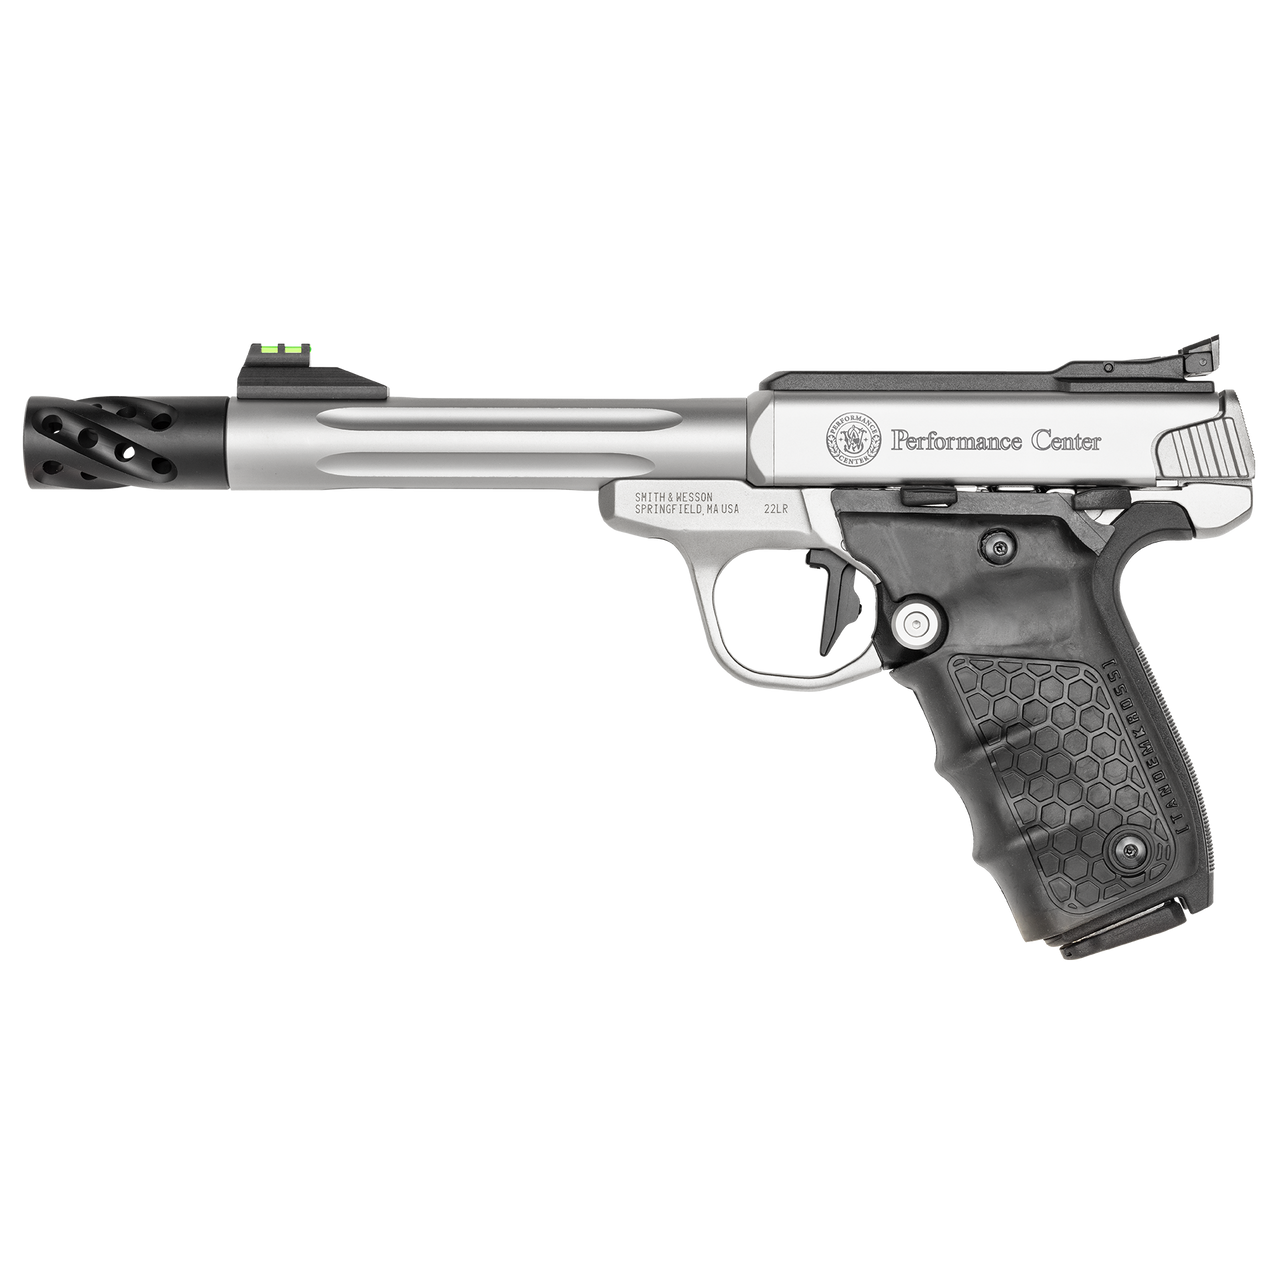 Buy Smith & Wesson Performance Center SW22 Victory Target Model Fiber Optic Sights Pistol Online